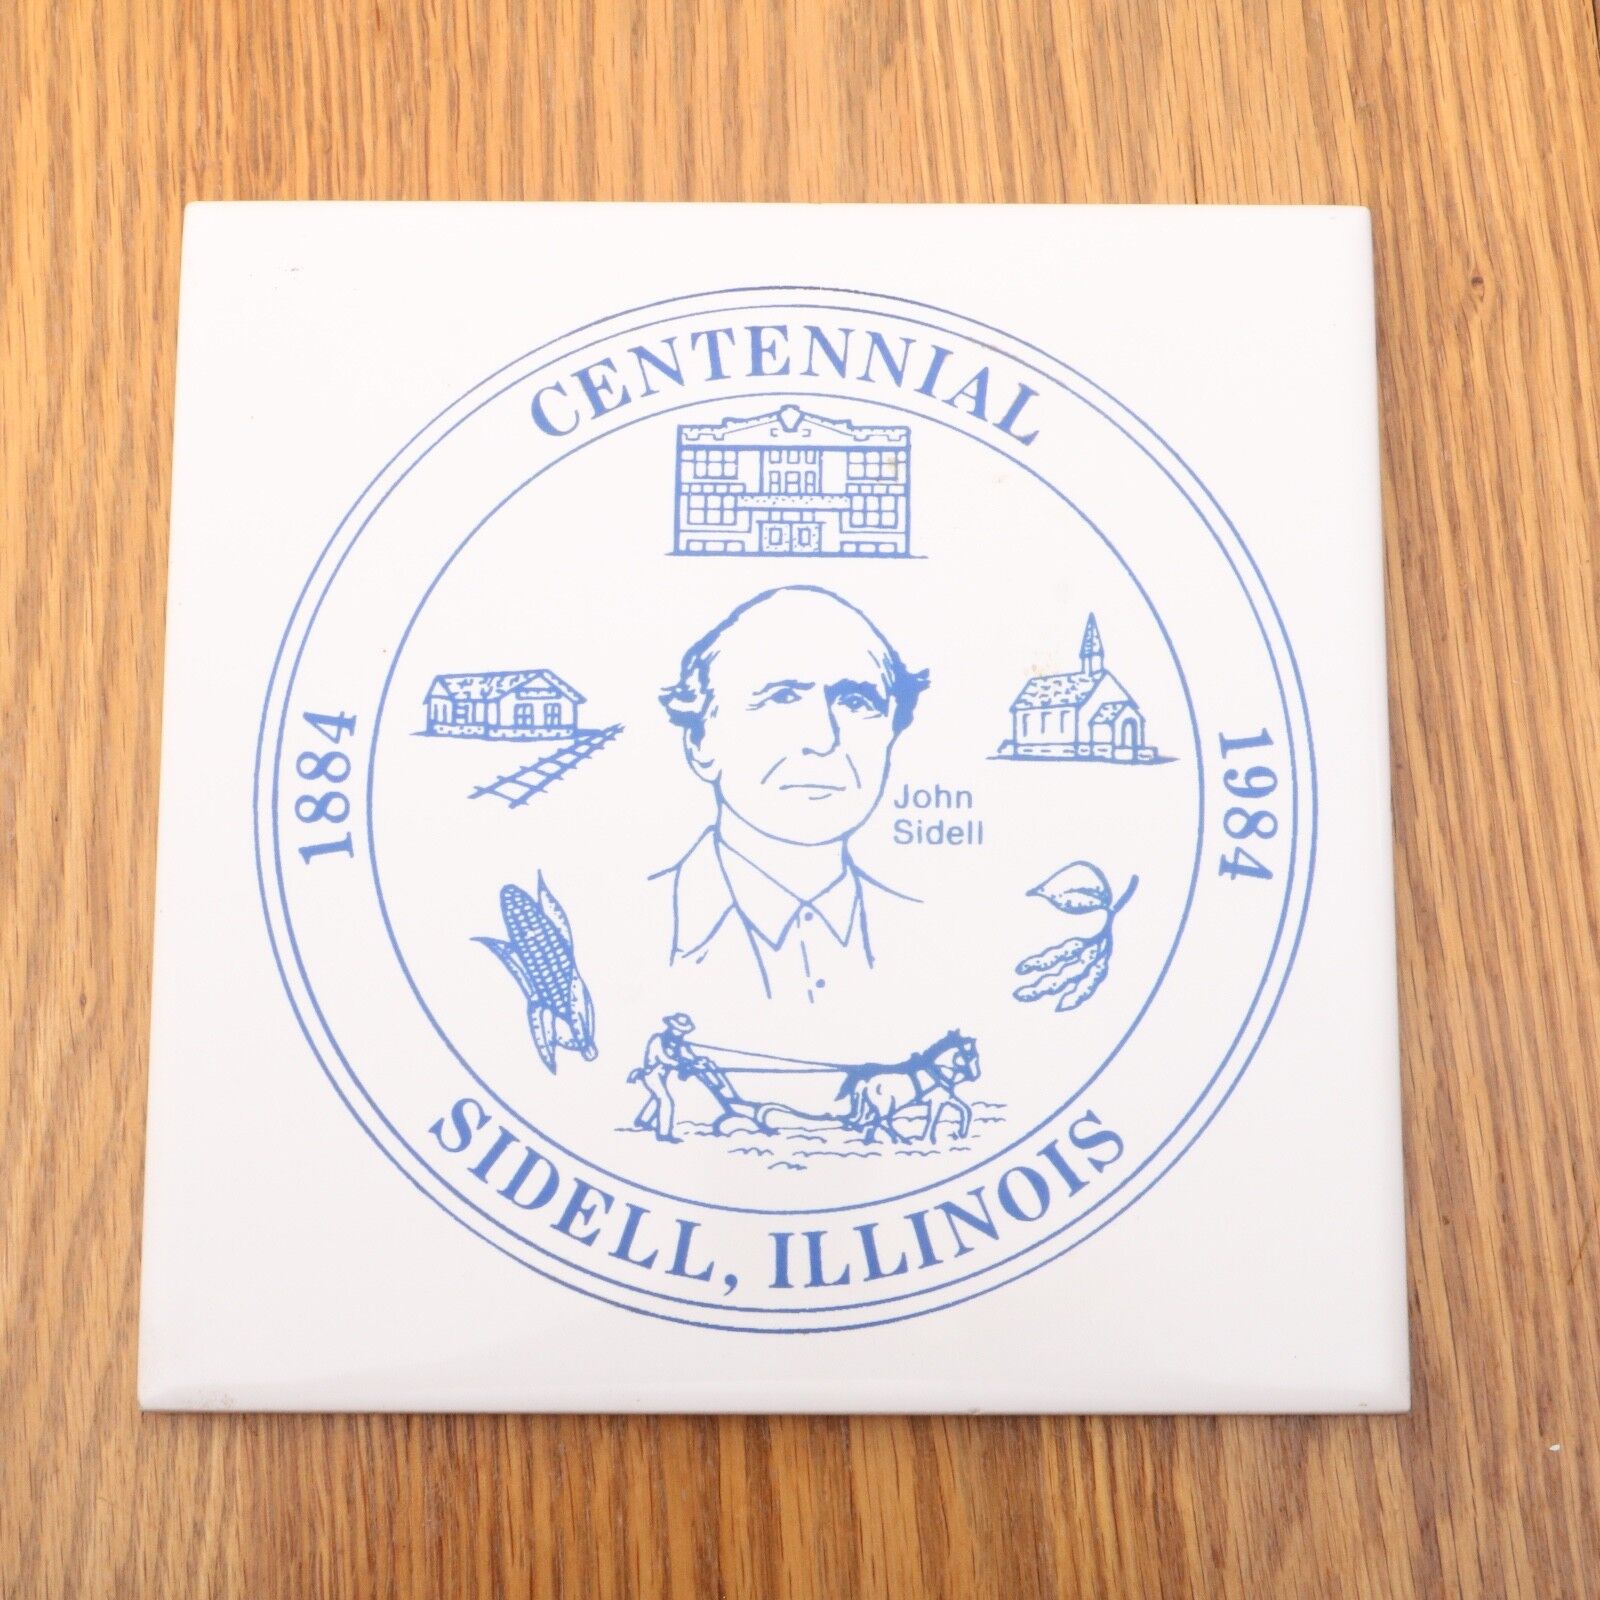 Sidell Illinois 1884-1984 Centennial Souvenir Tile Trivet 6\